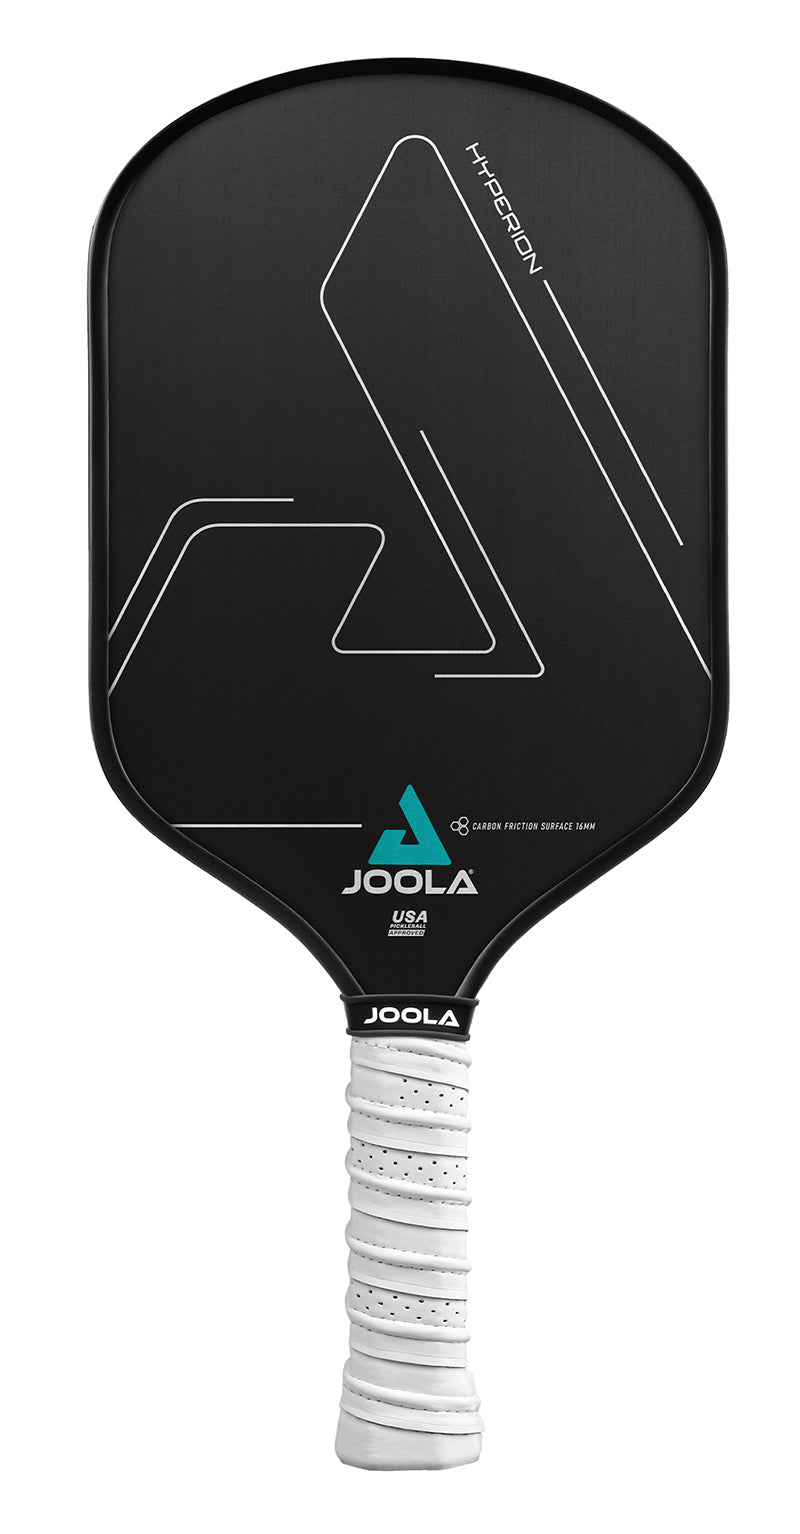 Joola Ben Johns Hyperion CFS 16mm Pickleball Paddle